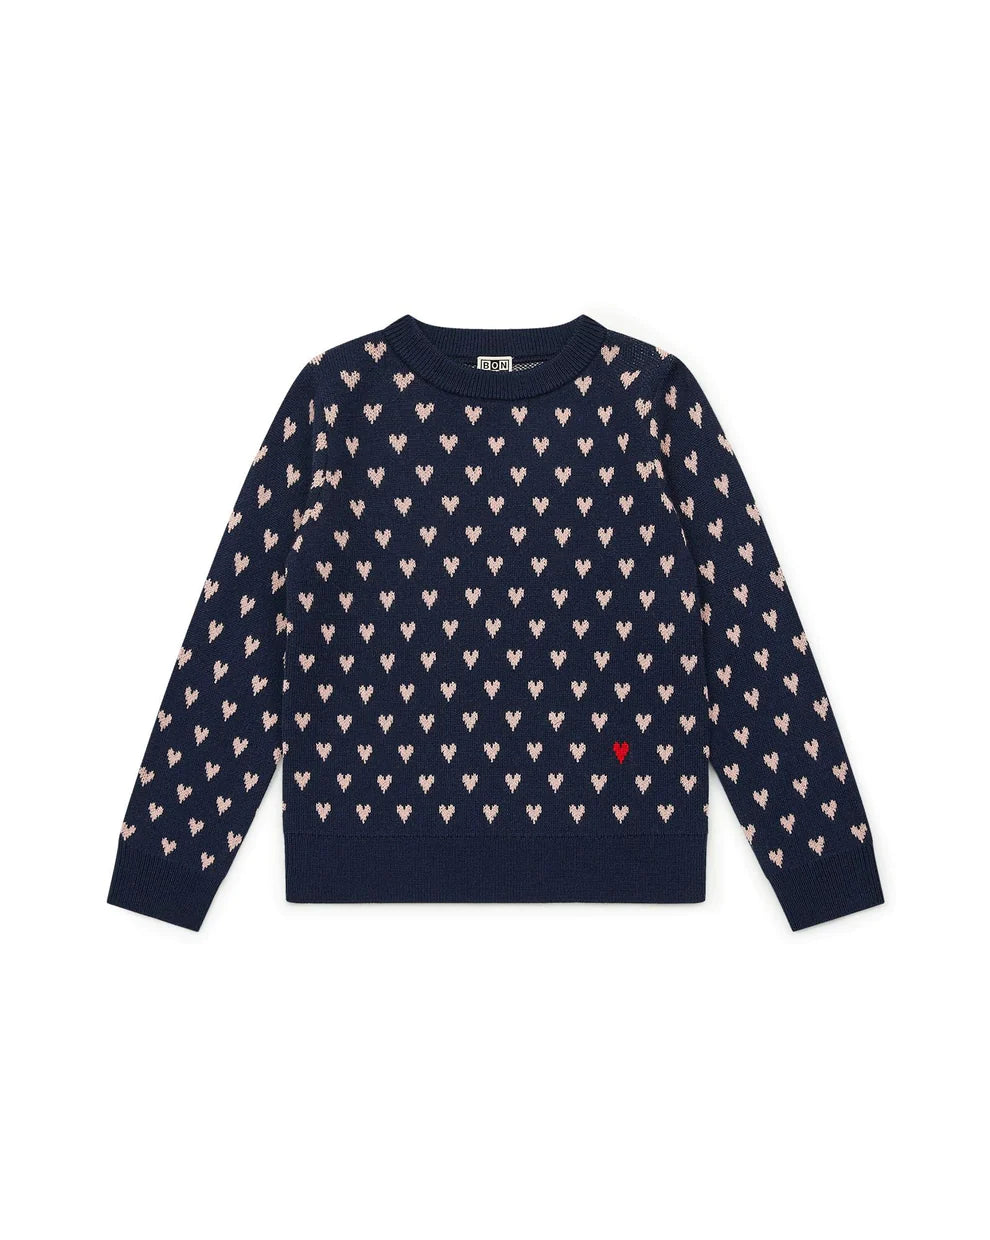 MyLove Navy Hearts Double Jacquard Knit Sweater